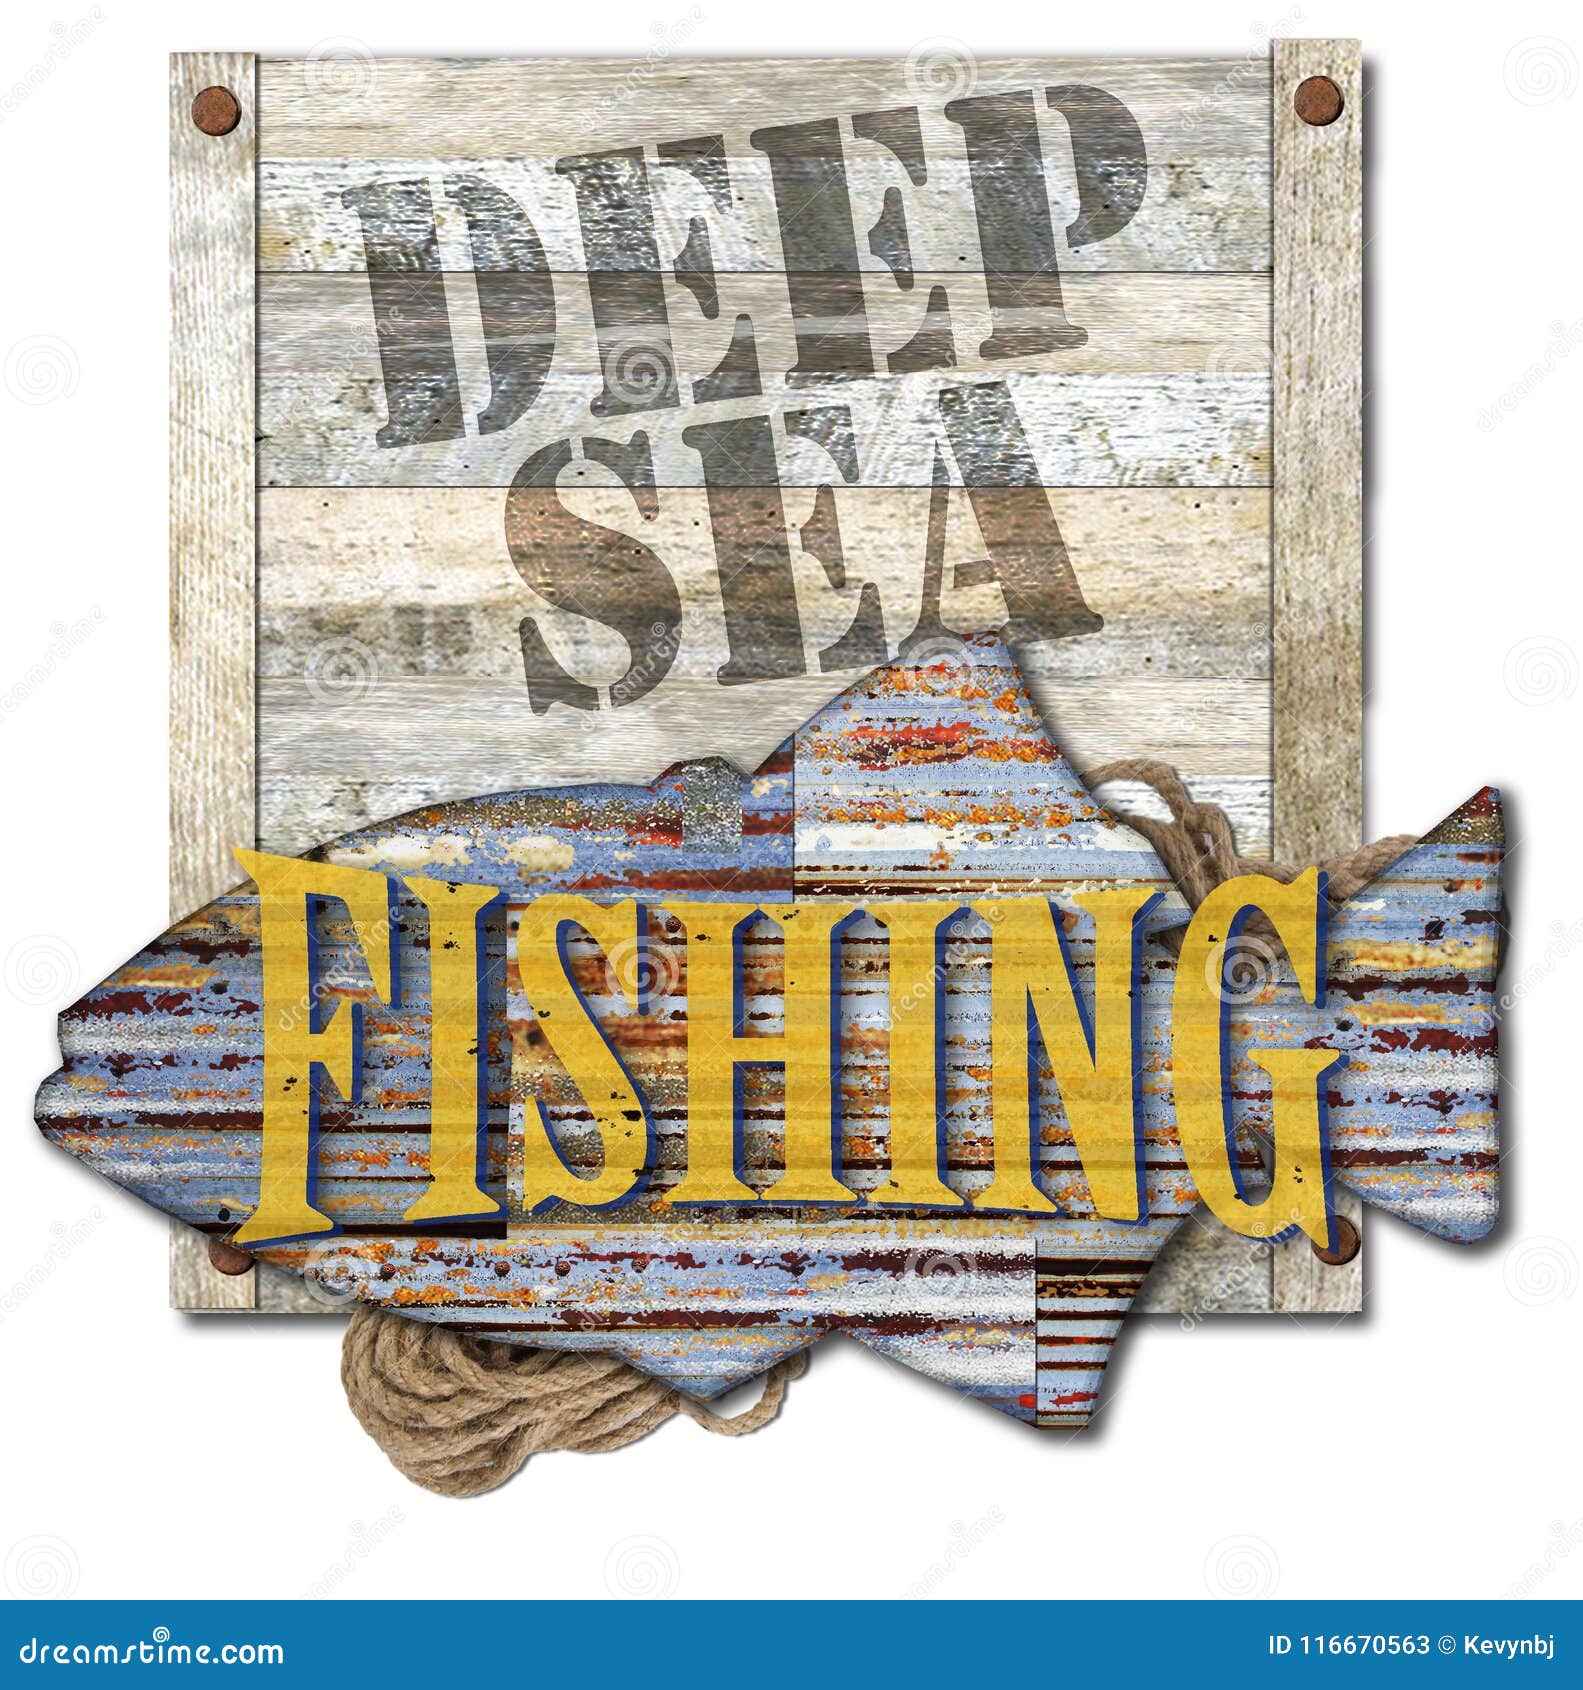 https://thumbs.dreamstime.com/z/deep-sea-fishing-sign-invitation-vintage-look-metal-wood-background-fish-shape-rope-deep-sea-fishing-sign-art-116670563.jpg